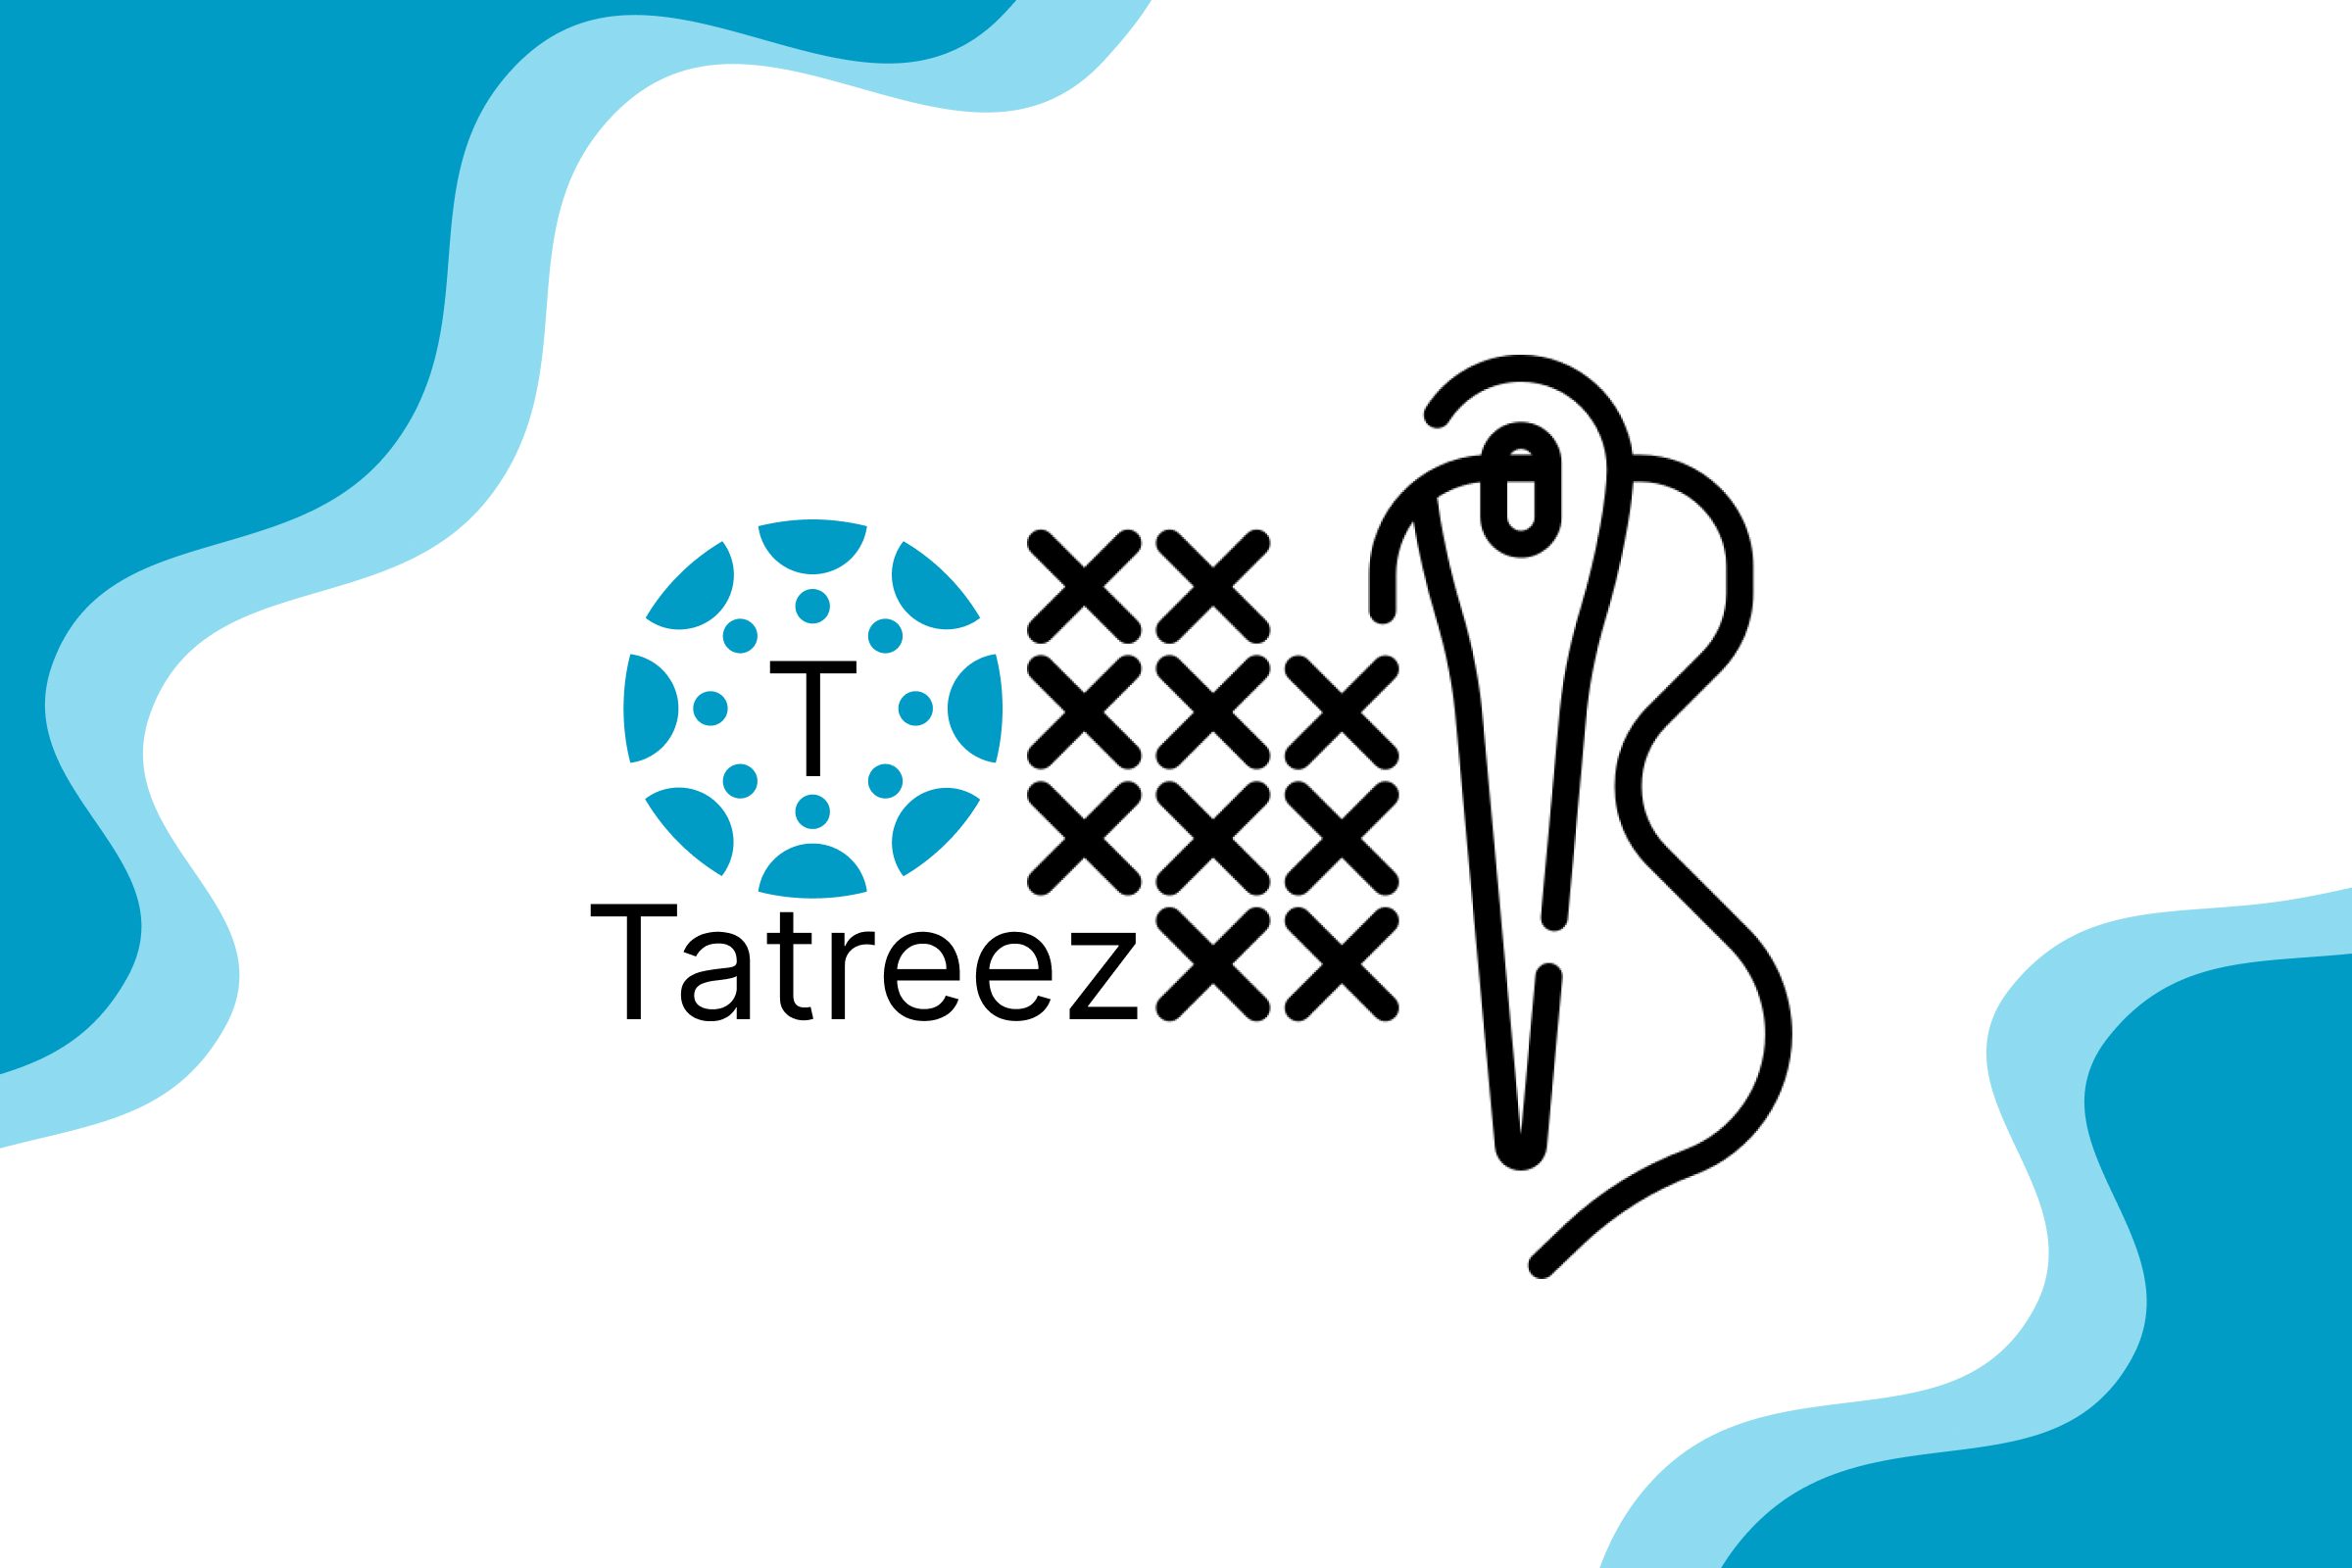 tatreez logo image